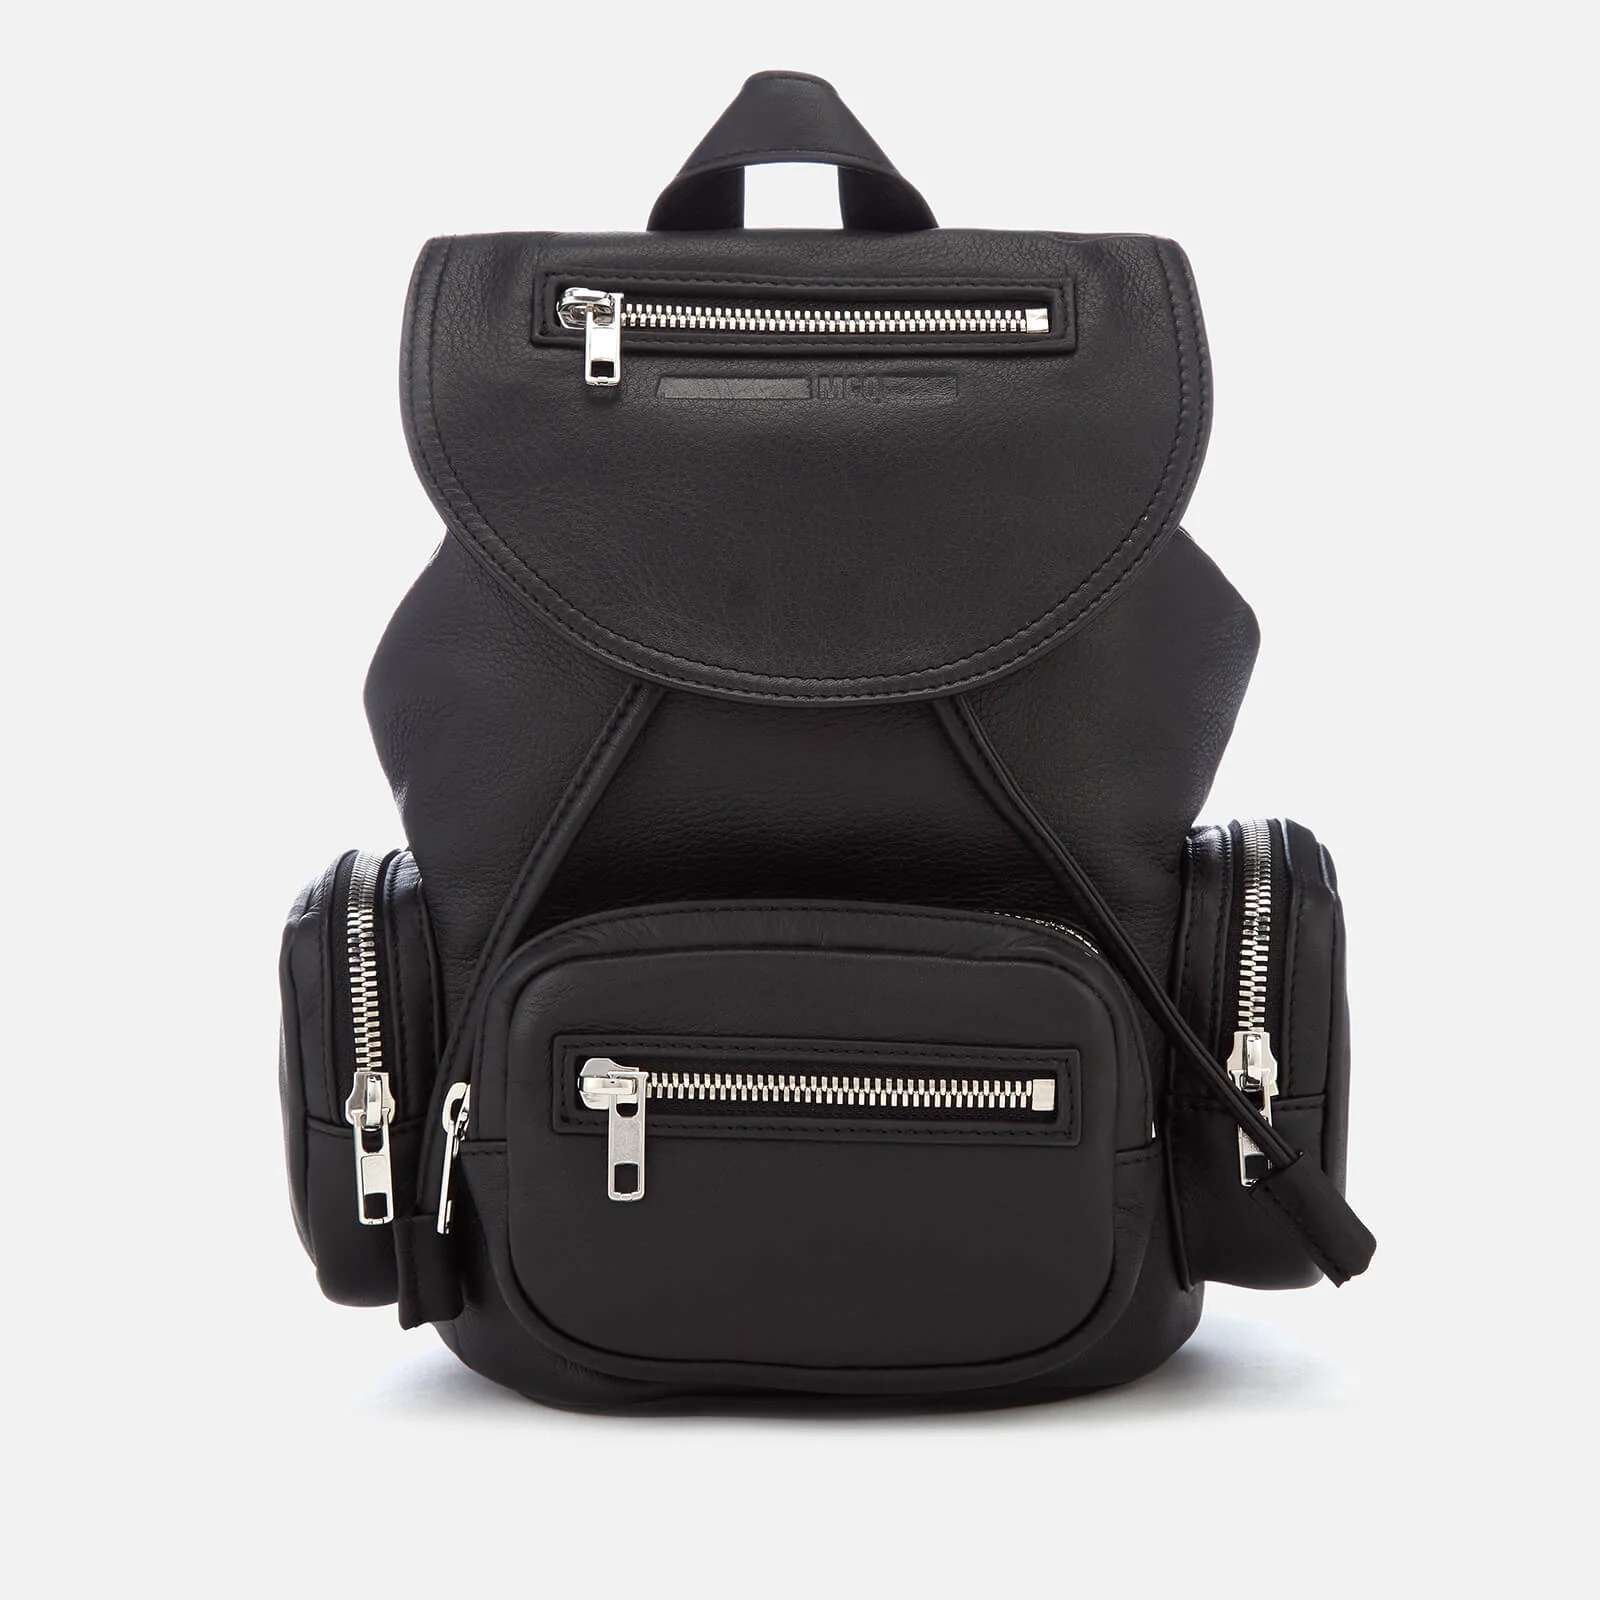 McQ Alexander McQueen Women's Mini Convertible Drawstring Bag - Black Image 1